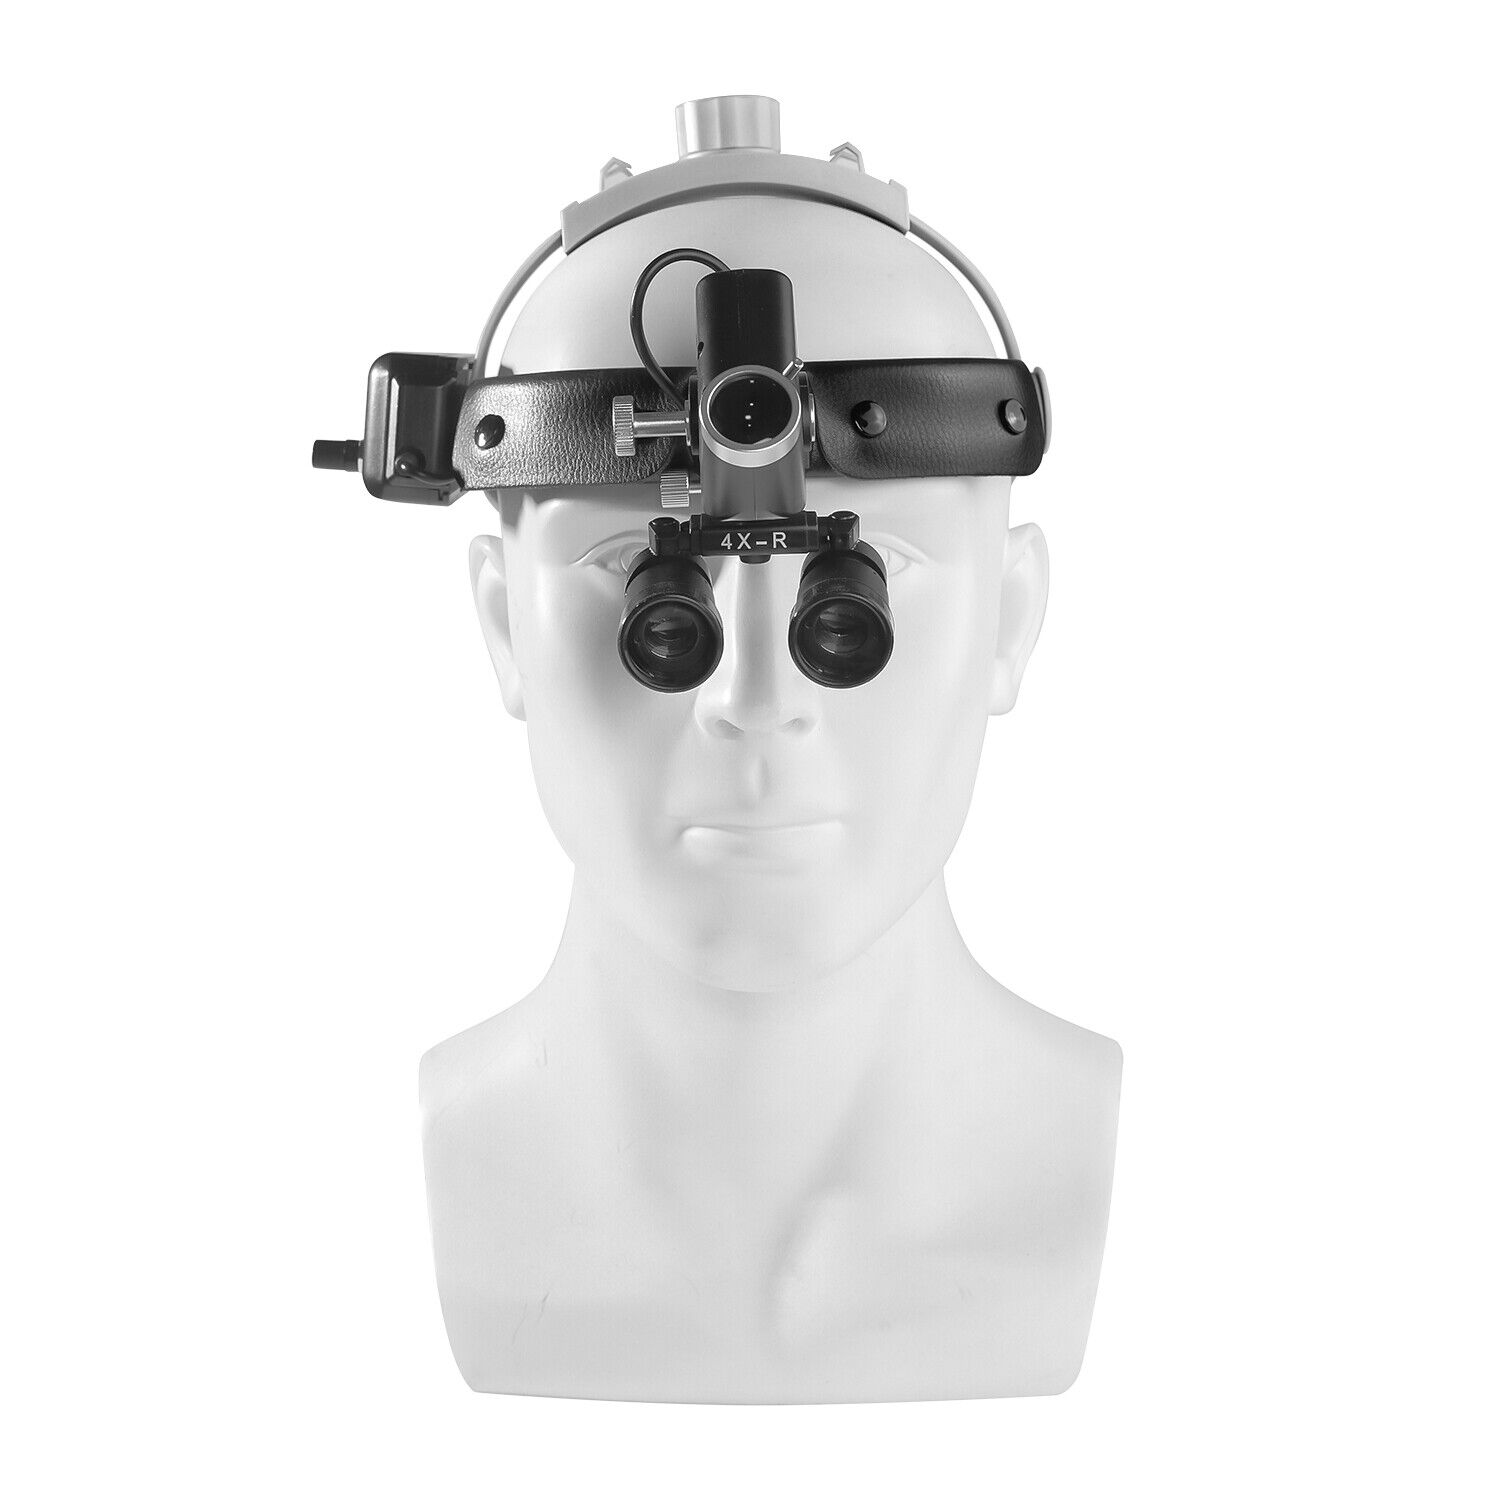 Dental 4X-R Surgical Binocular Loupes &Headband Medical LED Light & Carton Box